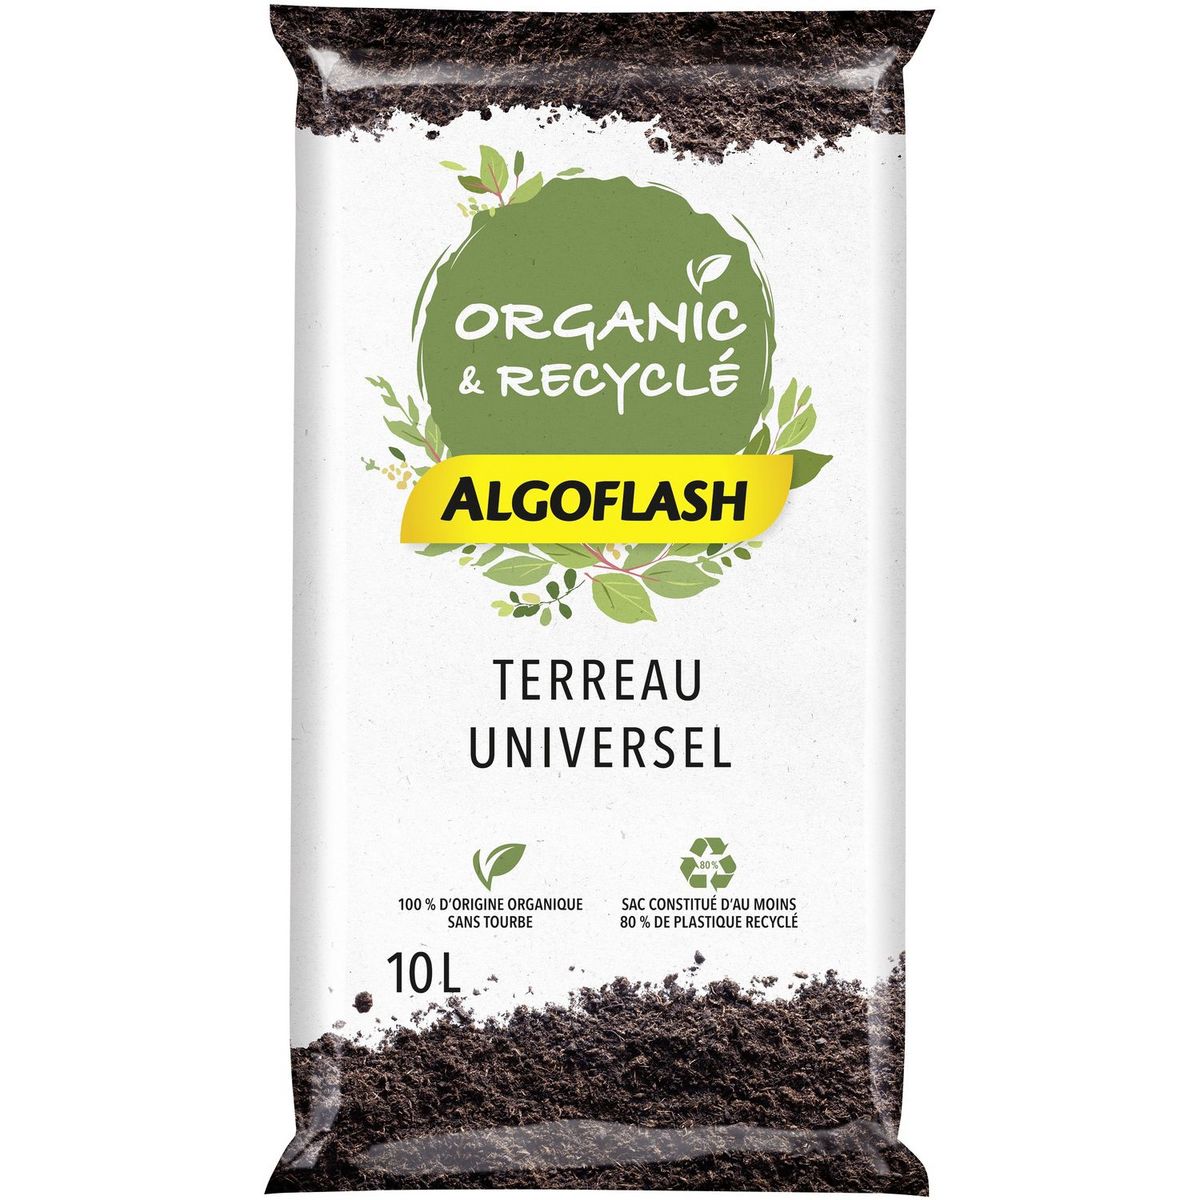 ALGOFLASH Terreau universel organic 10L